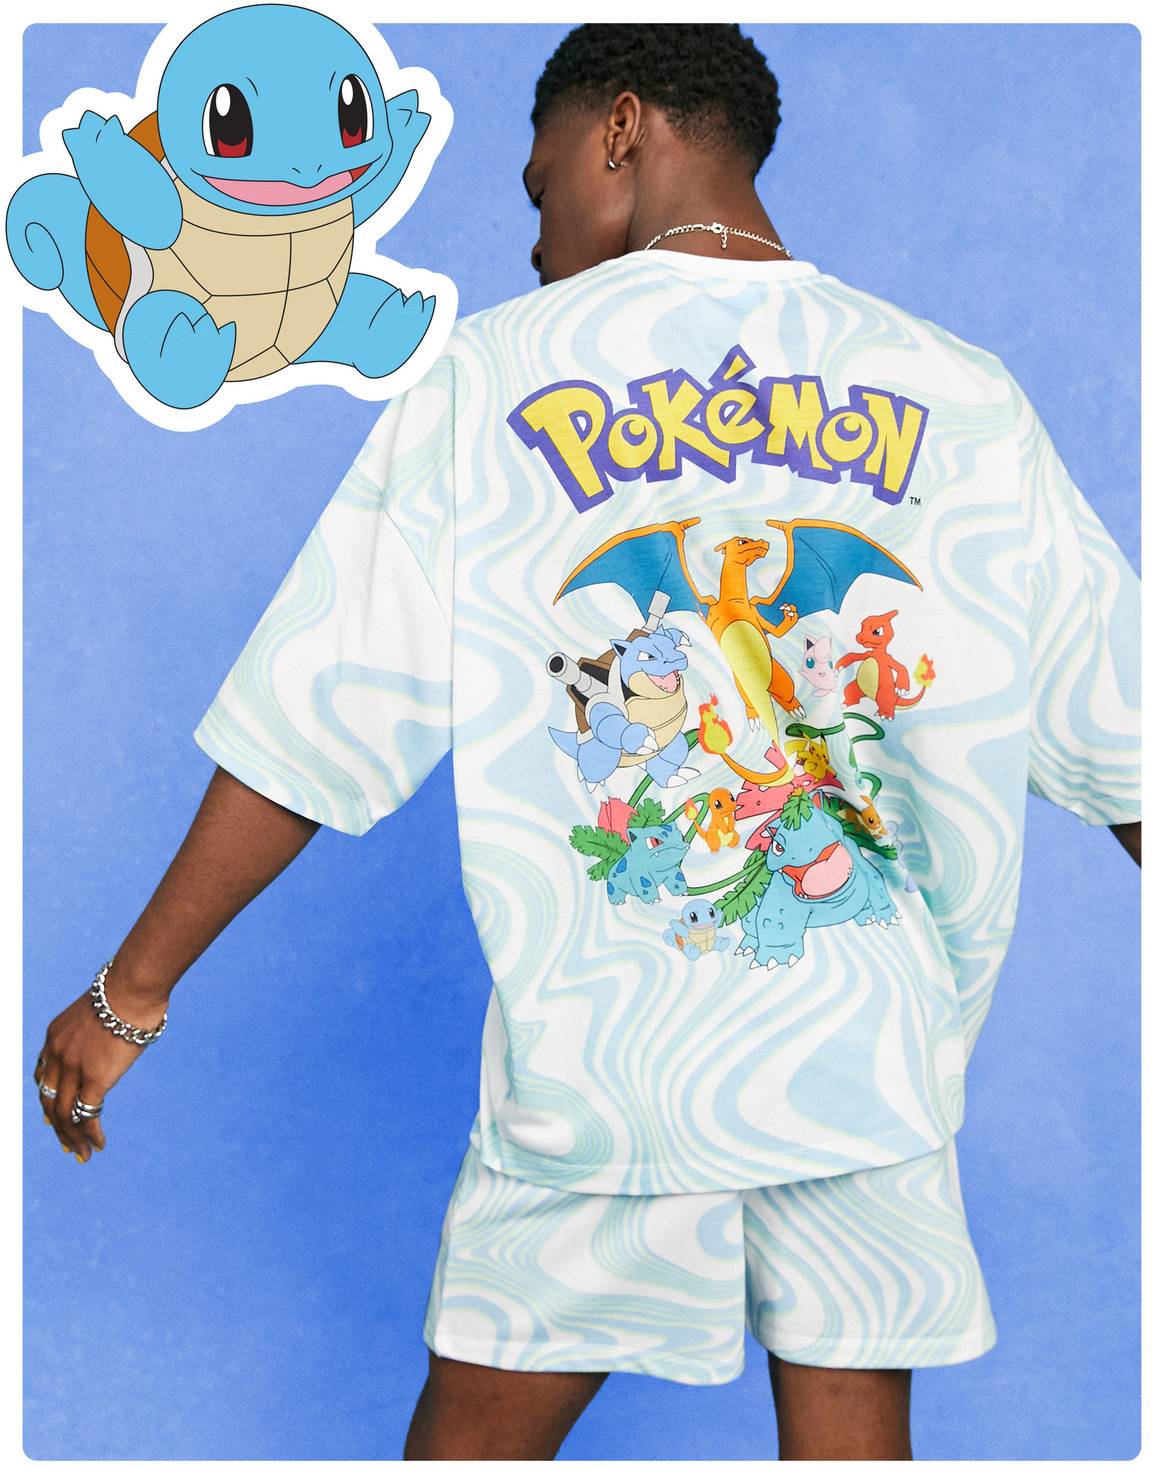 Image: Pokémon, courtesy of the brand